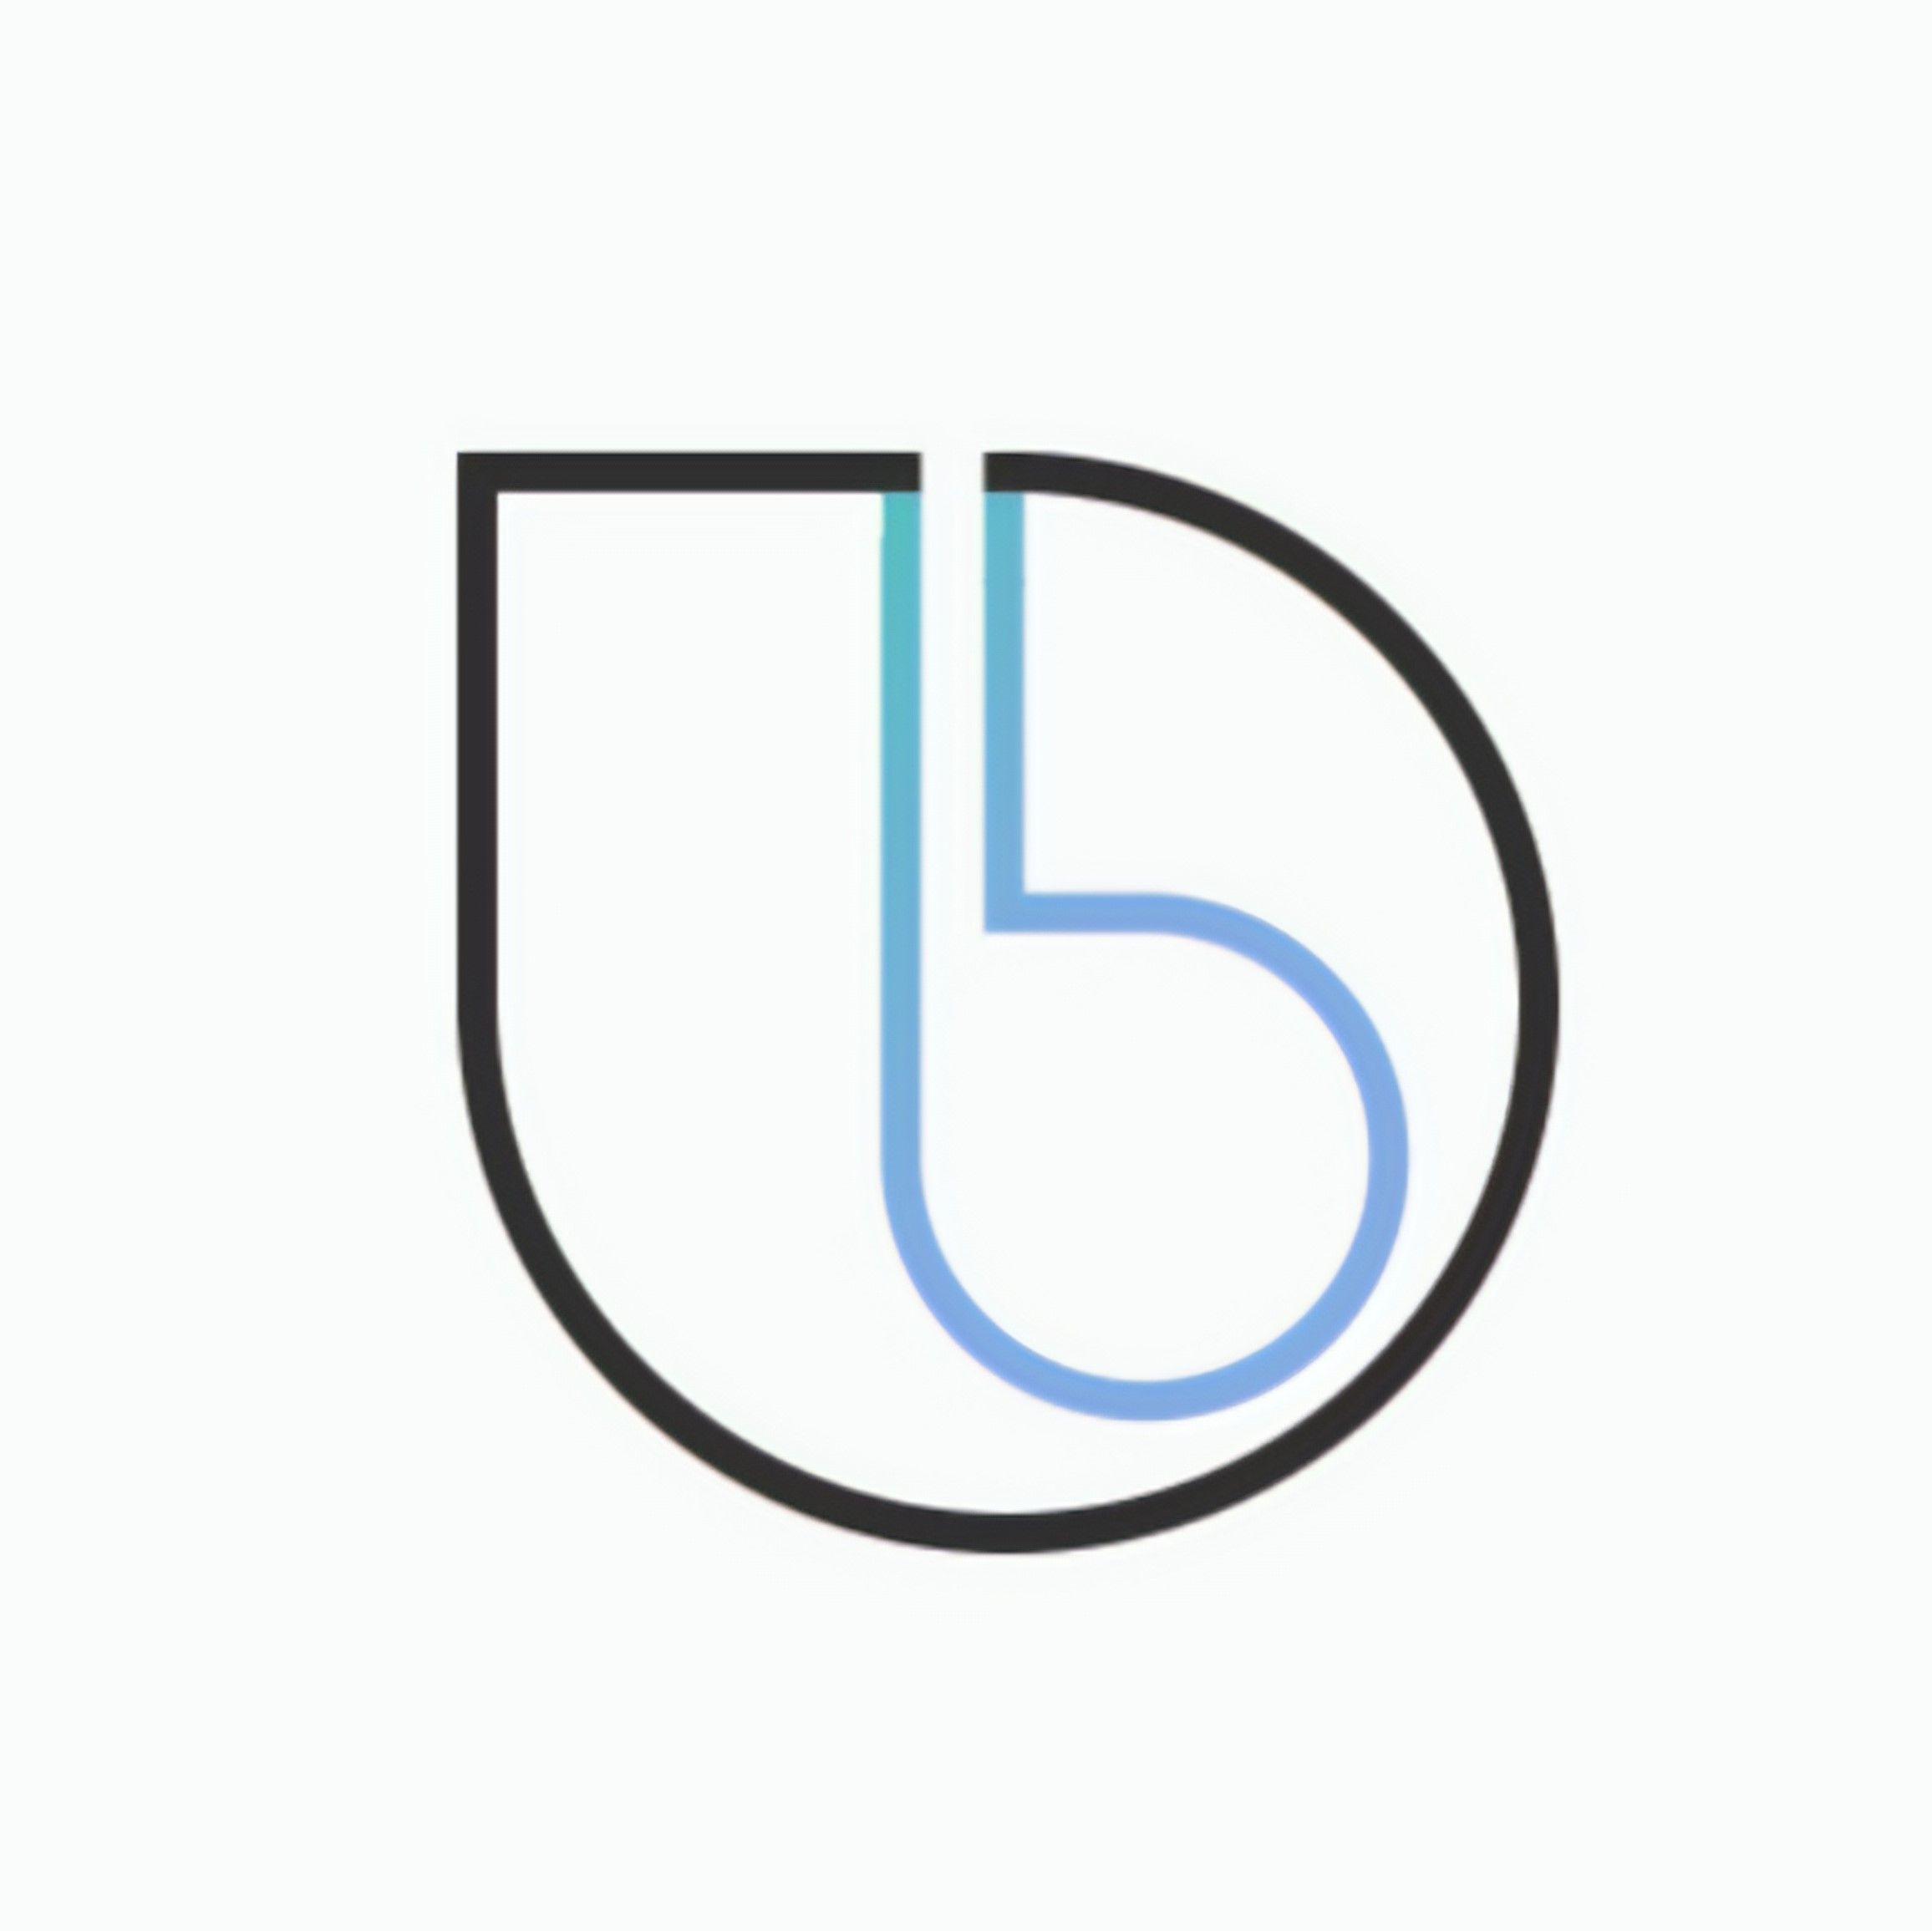 Bixby Logo - File:Bixby logo.jpg - Wikimedia Commons